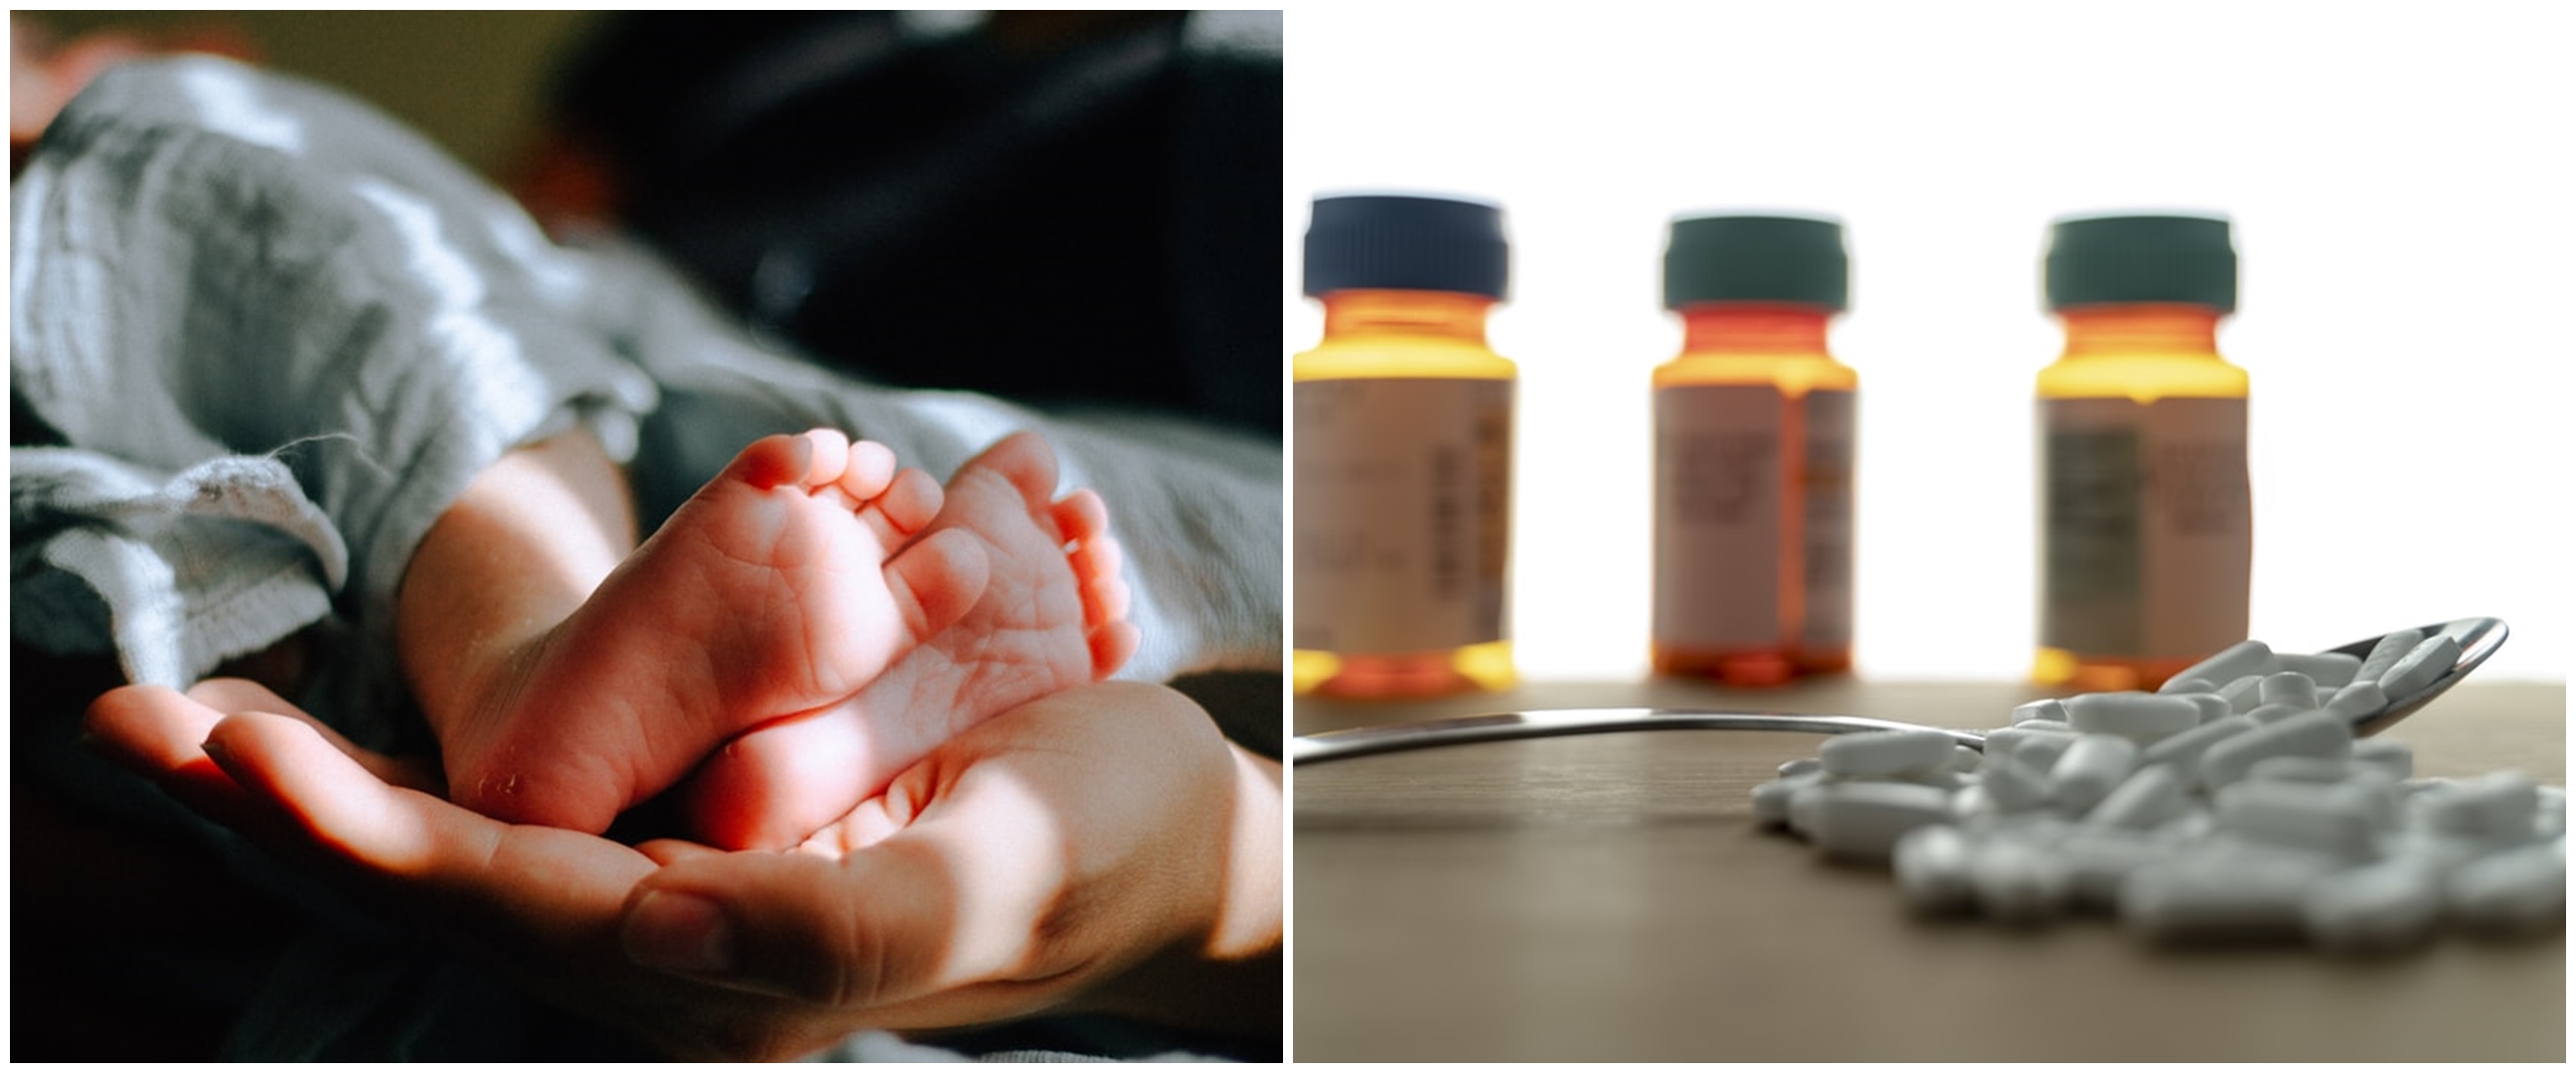 Tragis, bayi 5 bulan keracunan 10 obat yang diberikan pengasuh